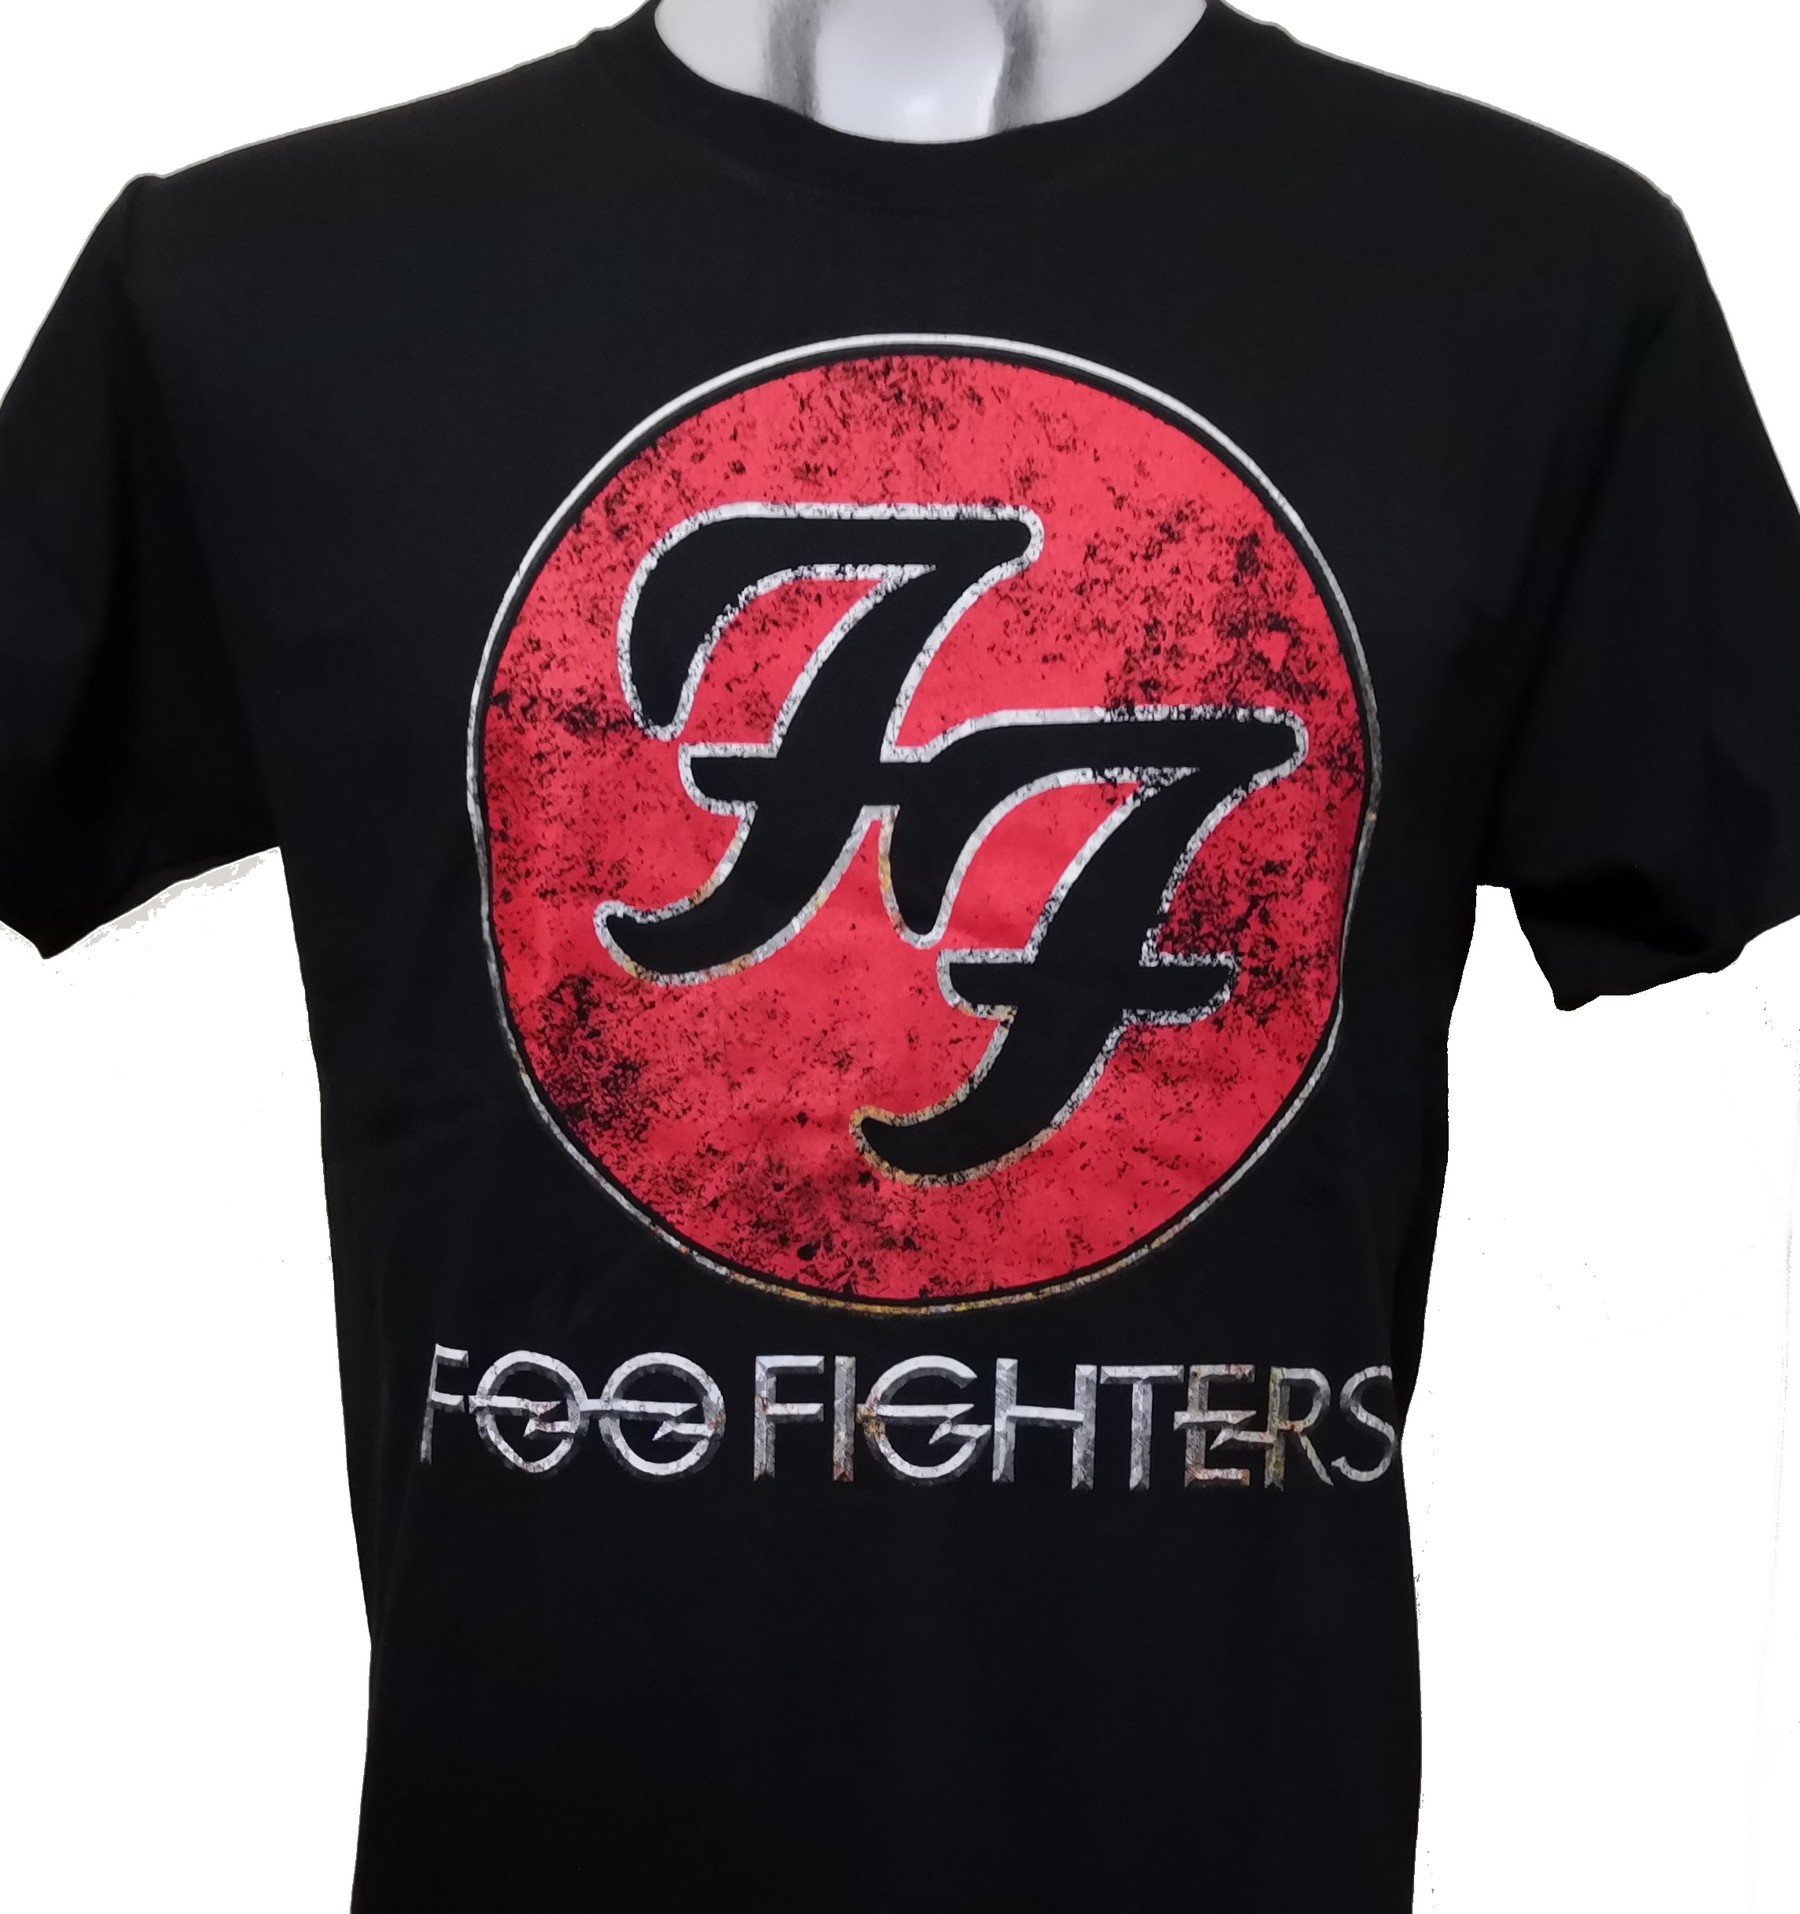 Foo Fighters t-shirt size S – RoxxBKK